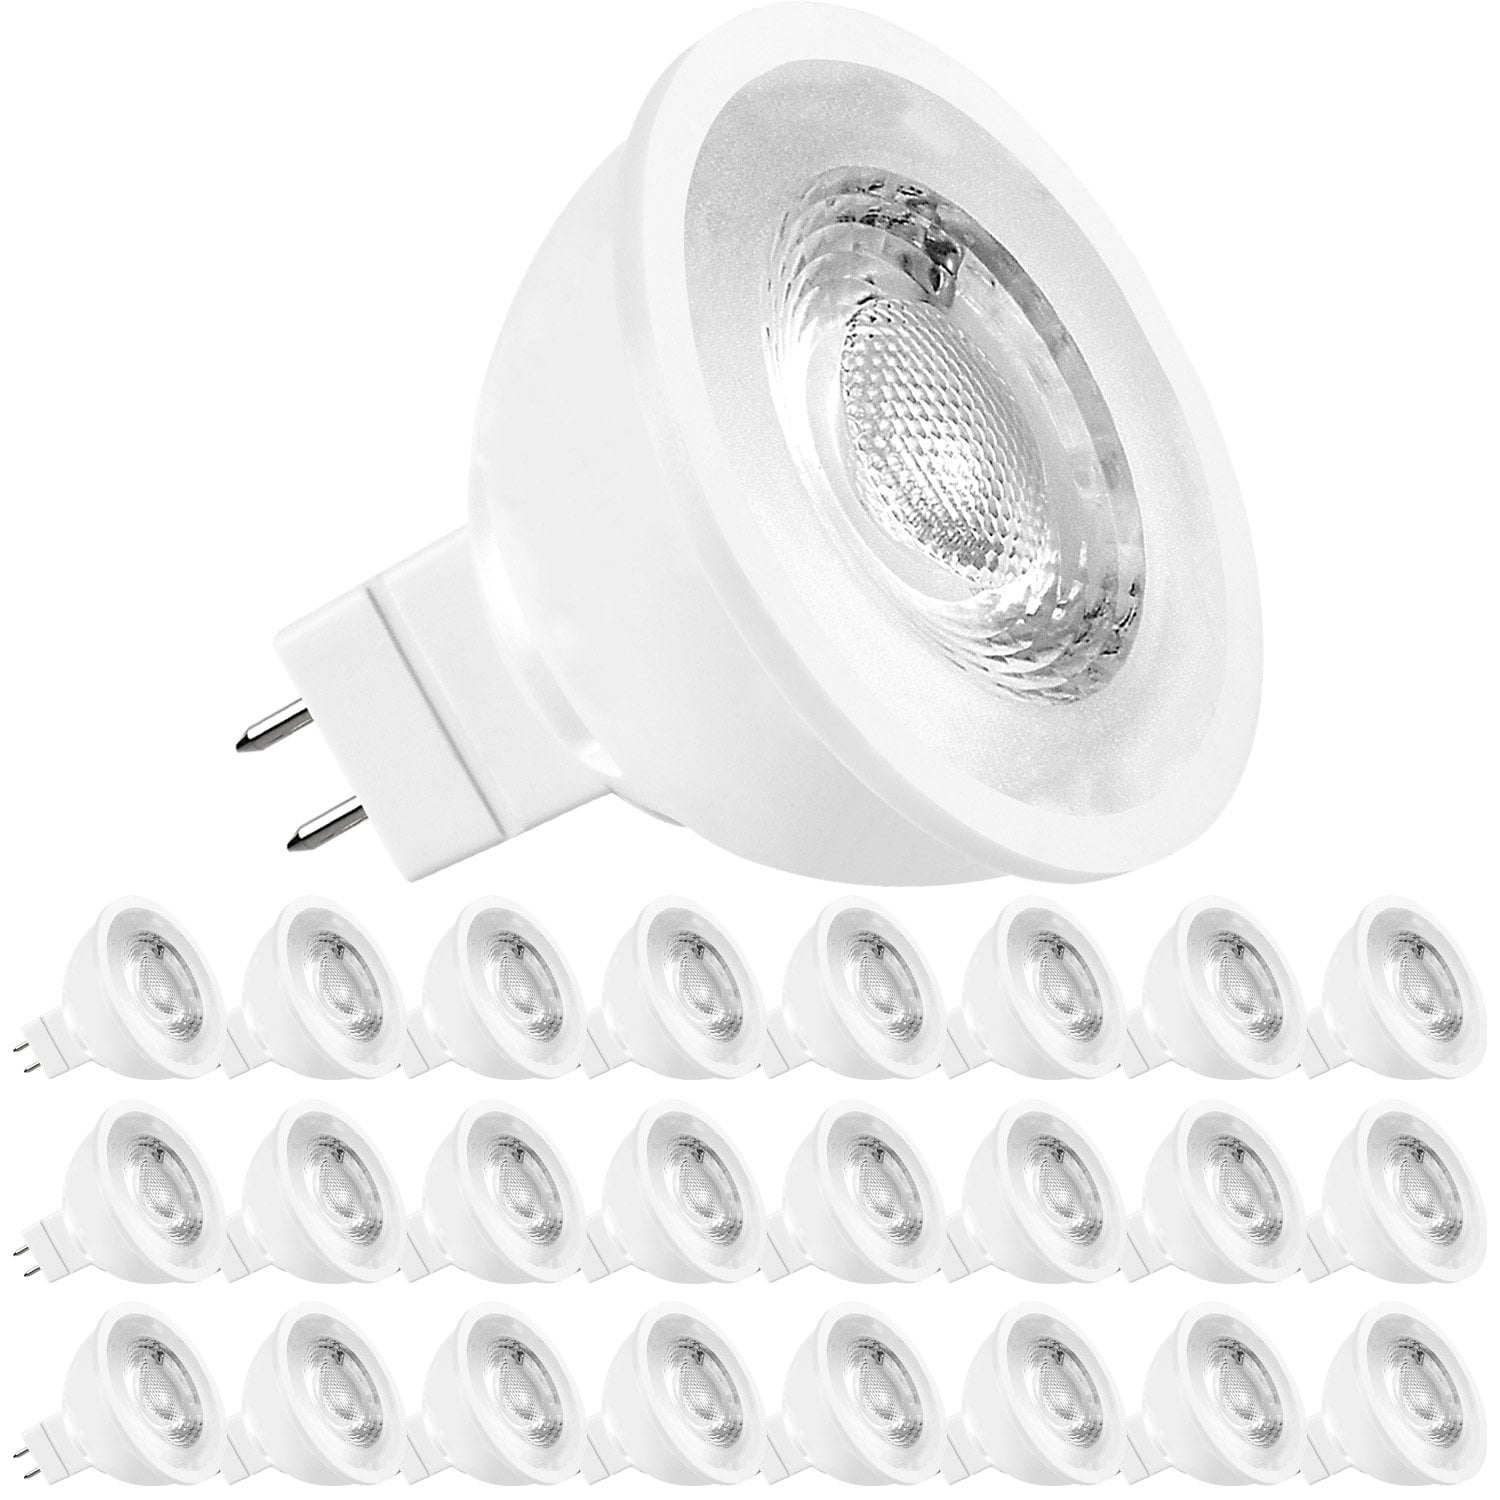 Luxrite MR16 LED Dimmable Spot Light 6.5W 50W Equivalent 4000K Cool White, 500 Lumens, GU5.3, 24-Pack - Walmart.com